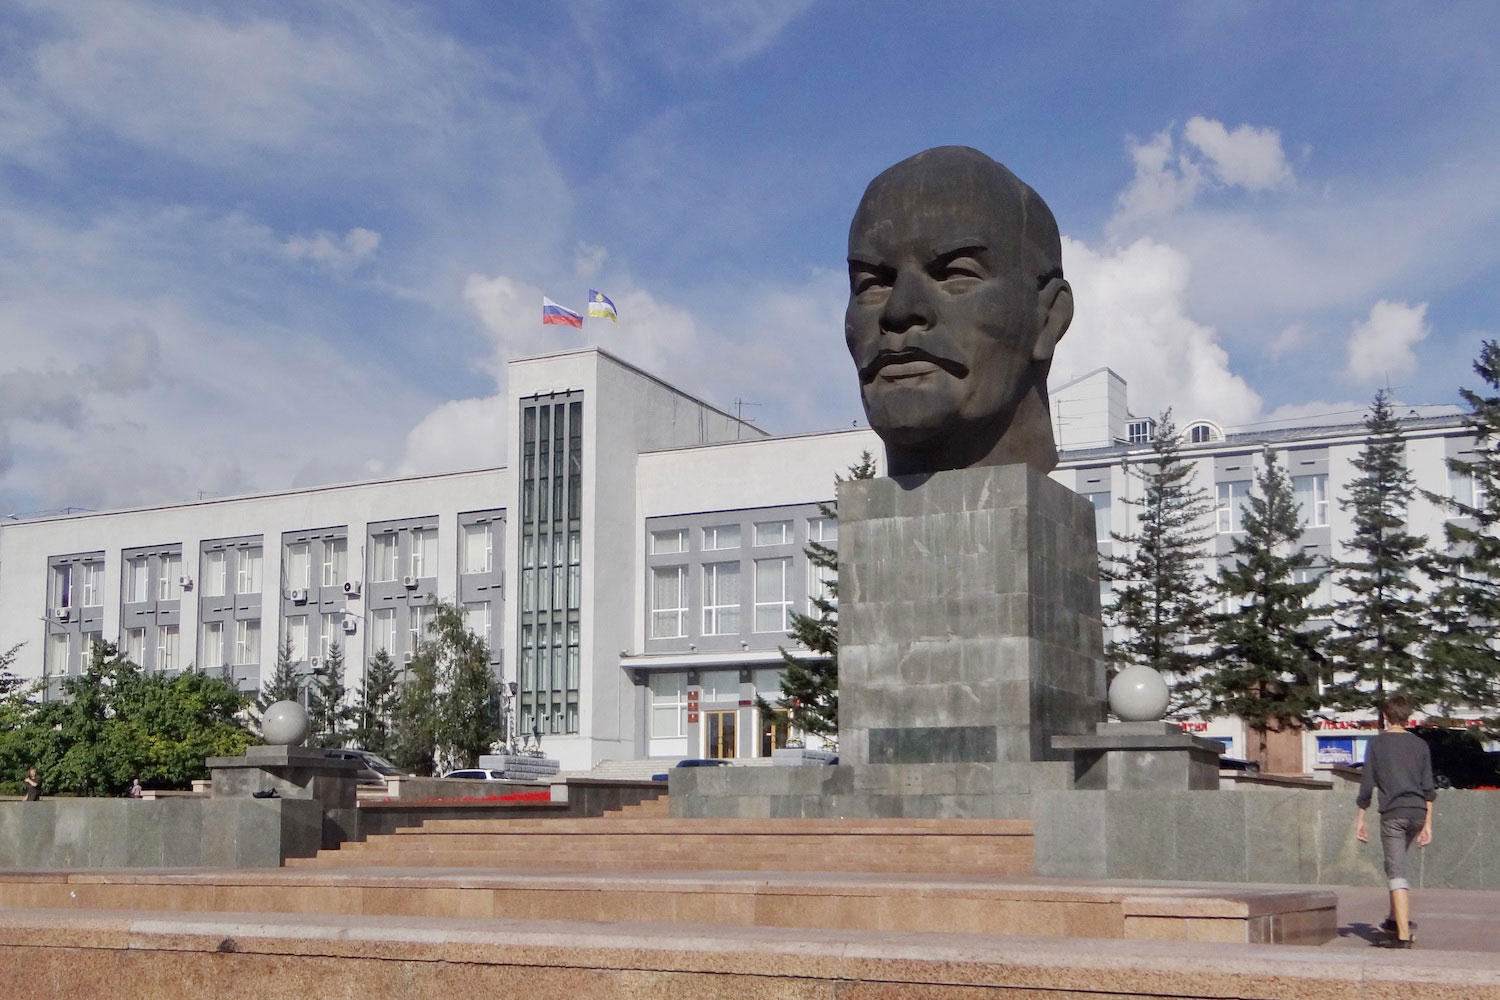 The sizeable bust of Vladimir Lenin. Image: Dudergofer/Wikimedia Commons under a CC licence 